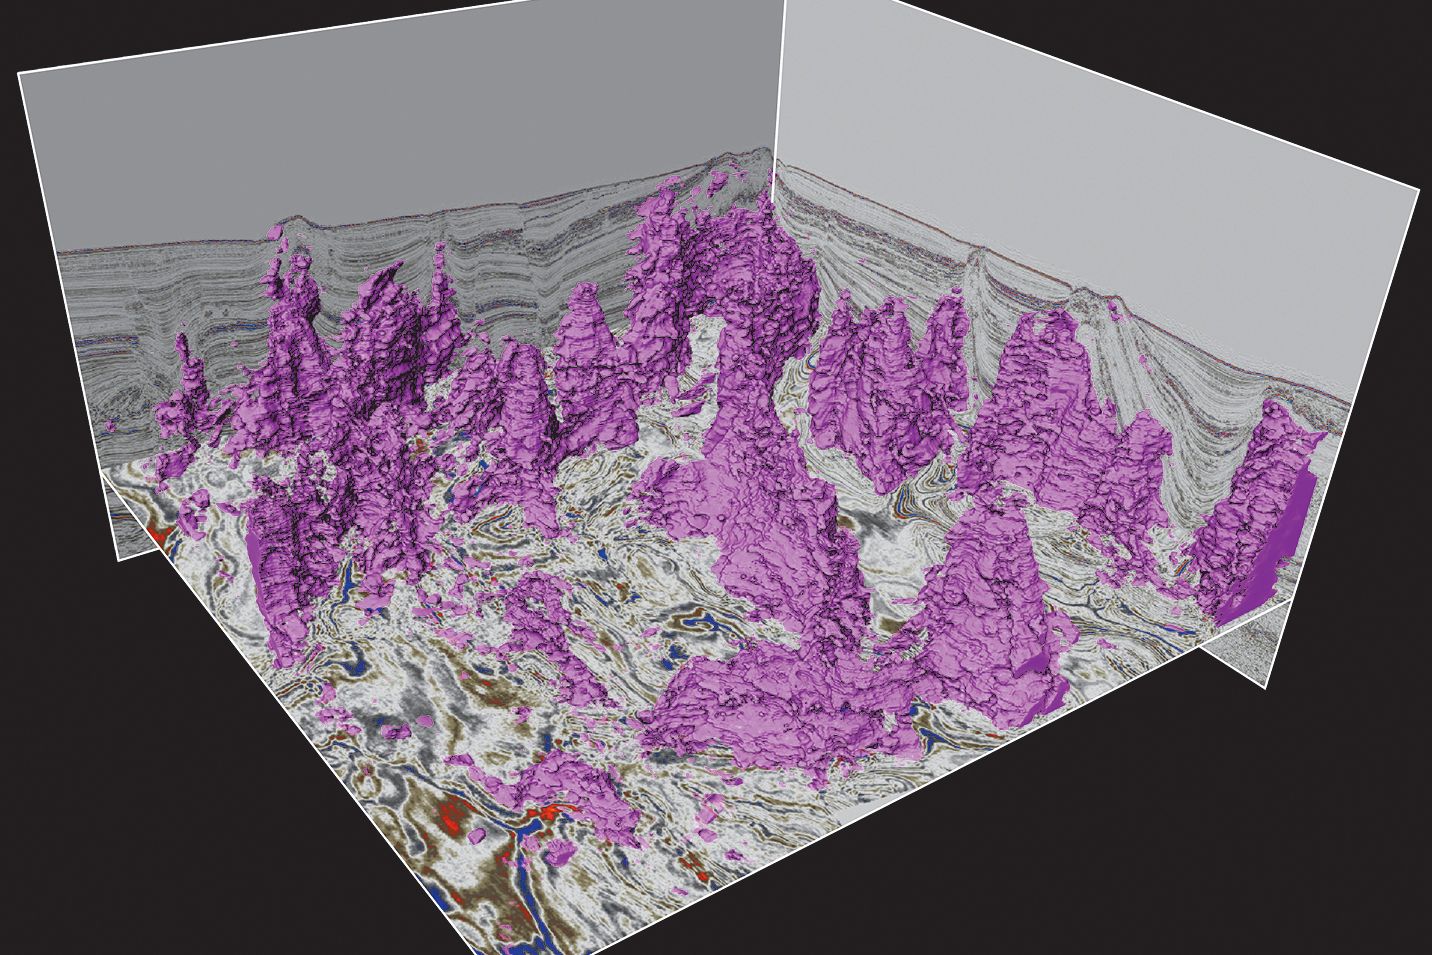 3D seismic interpretation with deep learning